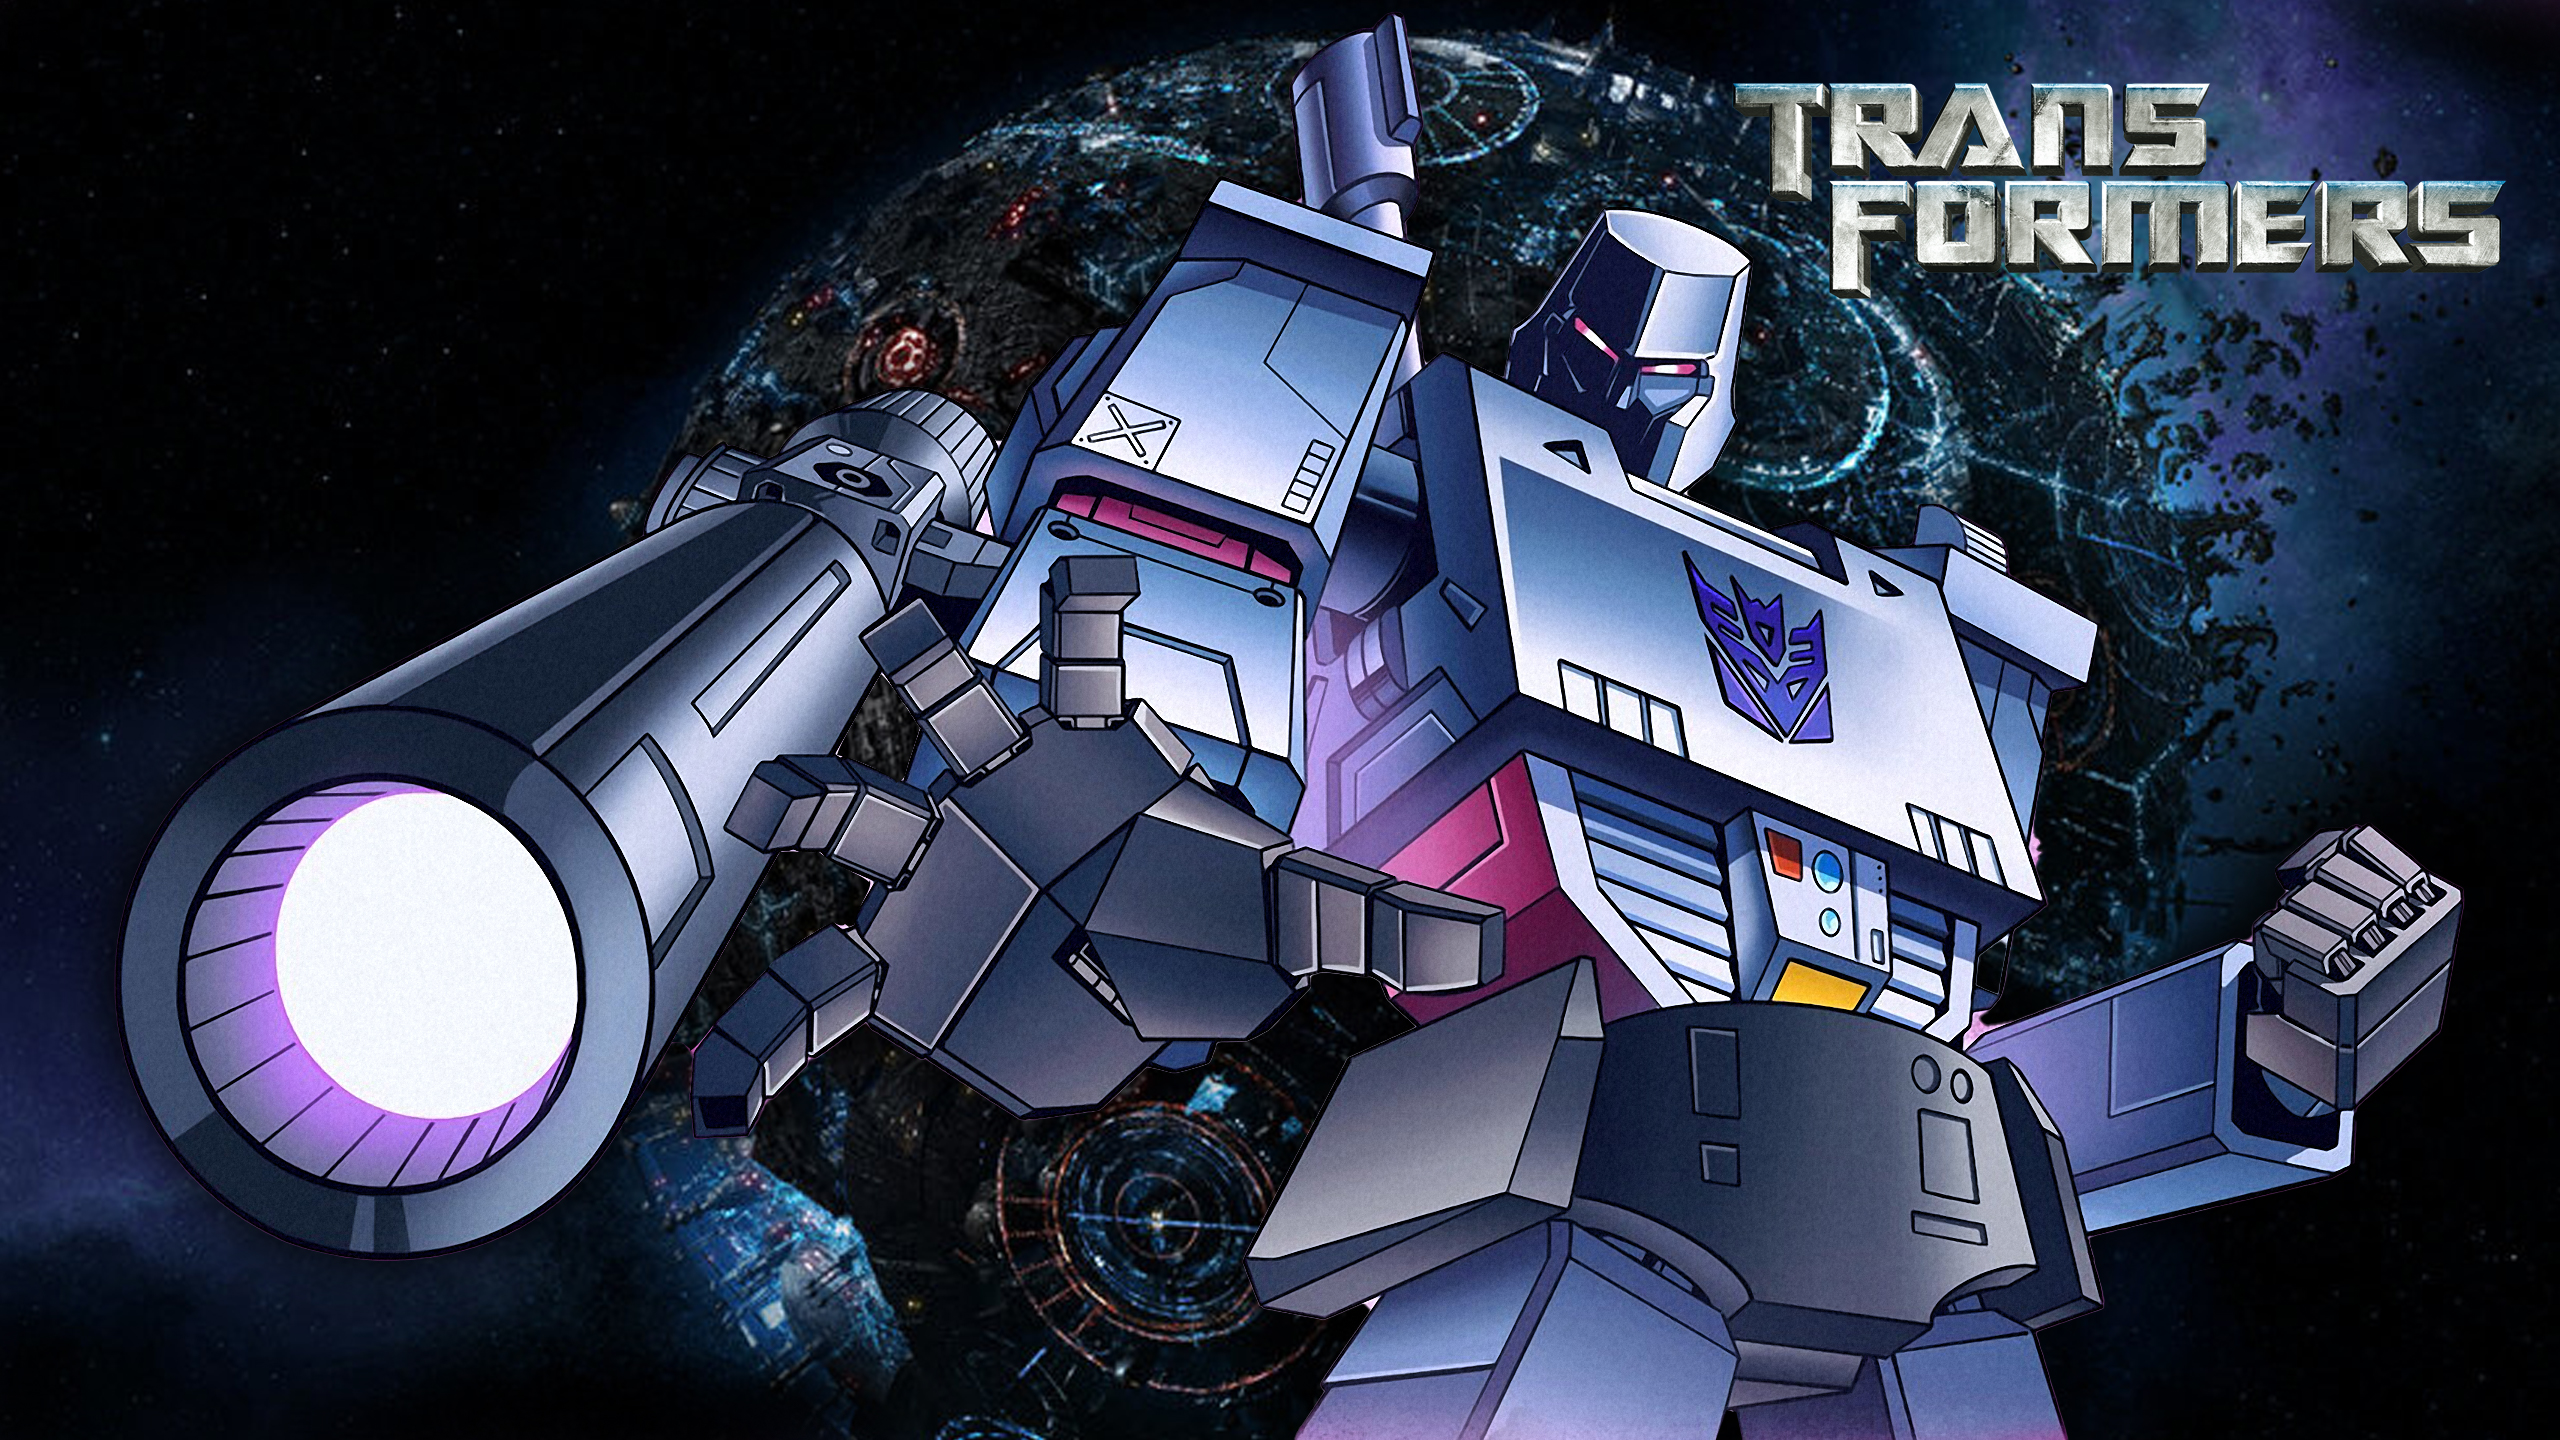 Transformers G1 Transformers Earth Wars Transformers Fall Of Cybertron Transformers  Cartoon Wallpaper - Resolution:2560x1440 - ID:1363332 